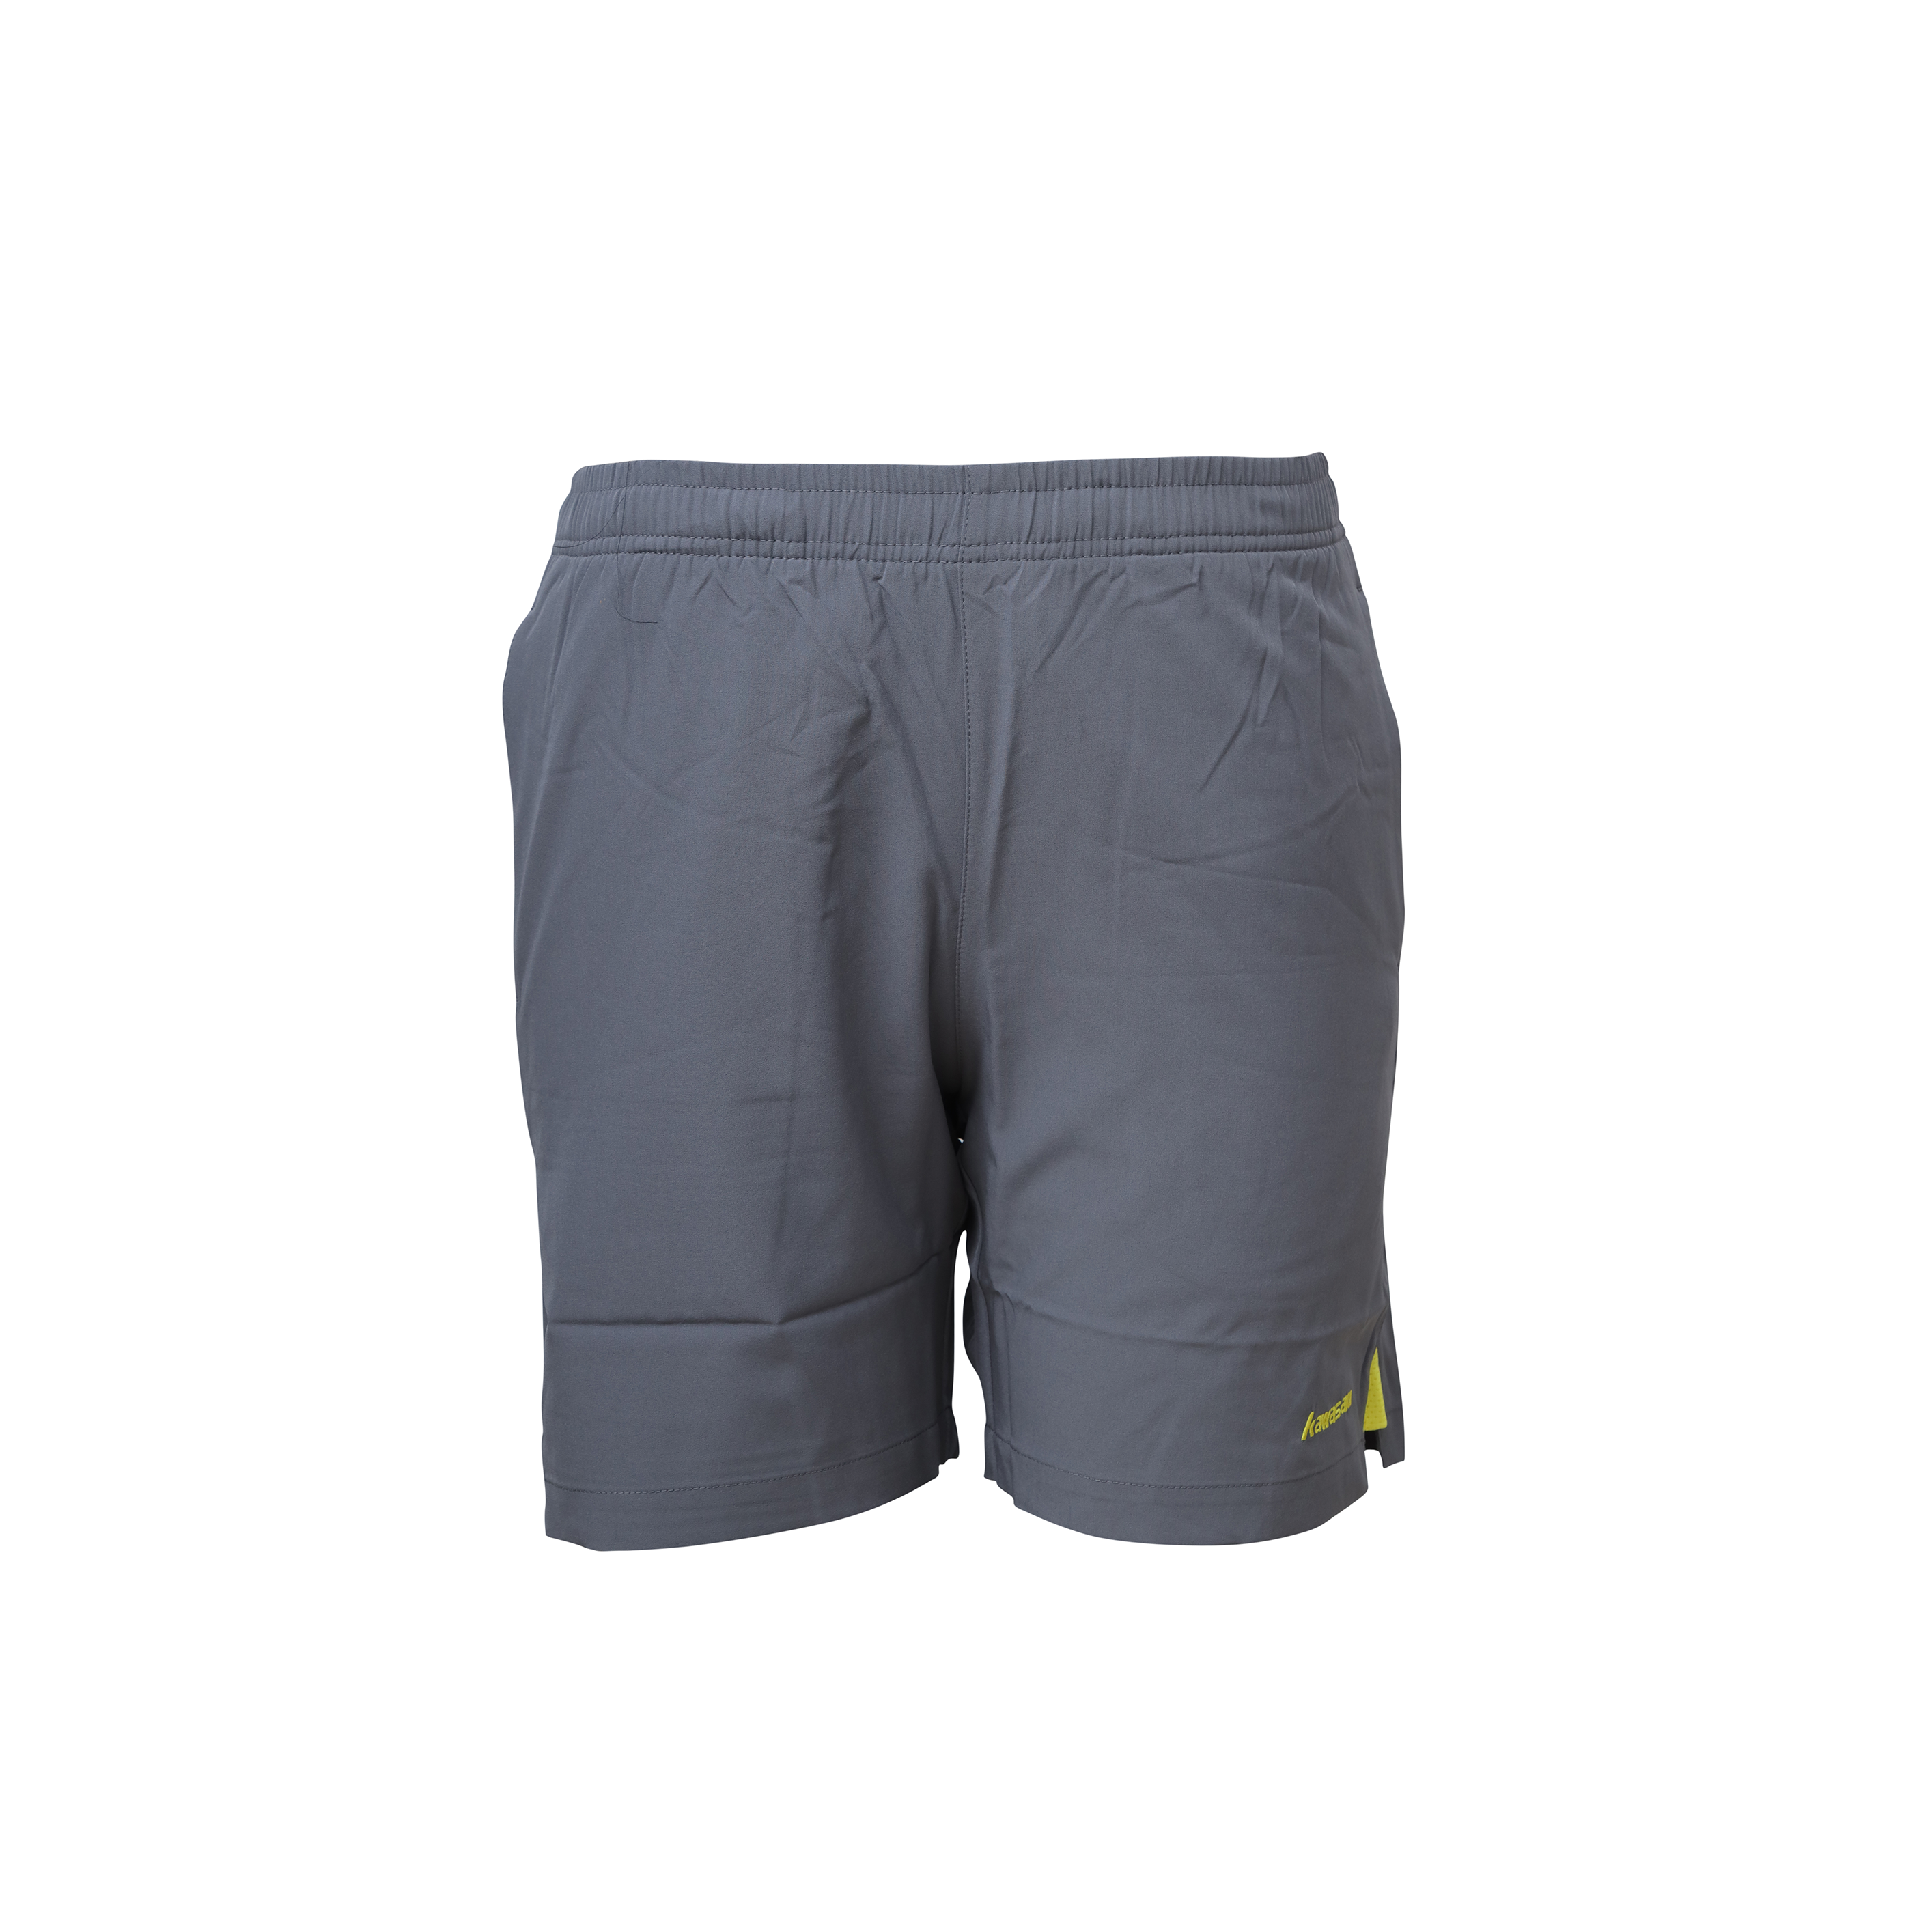 SP-173608 Shorts (Dark Grey)